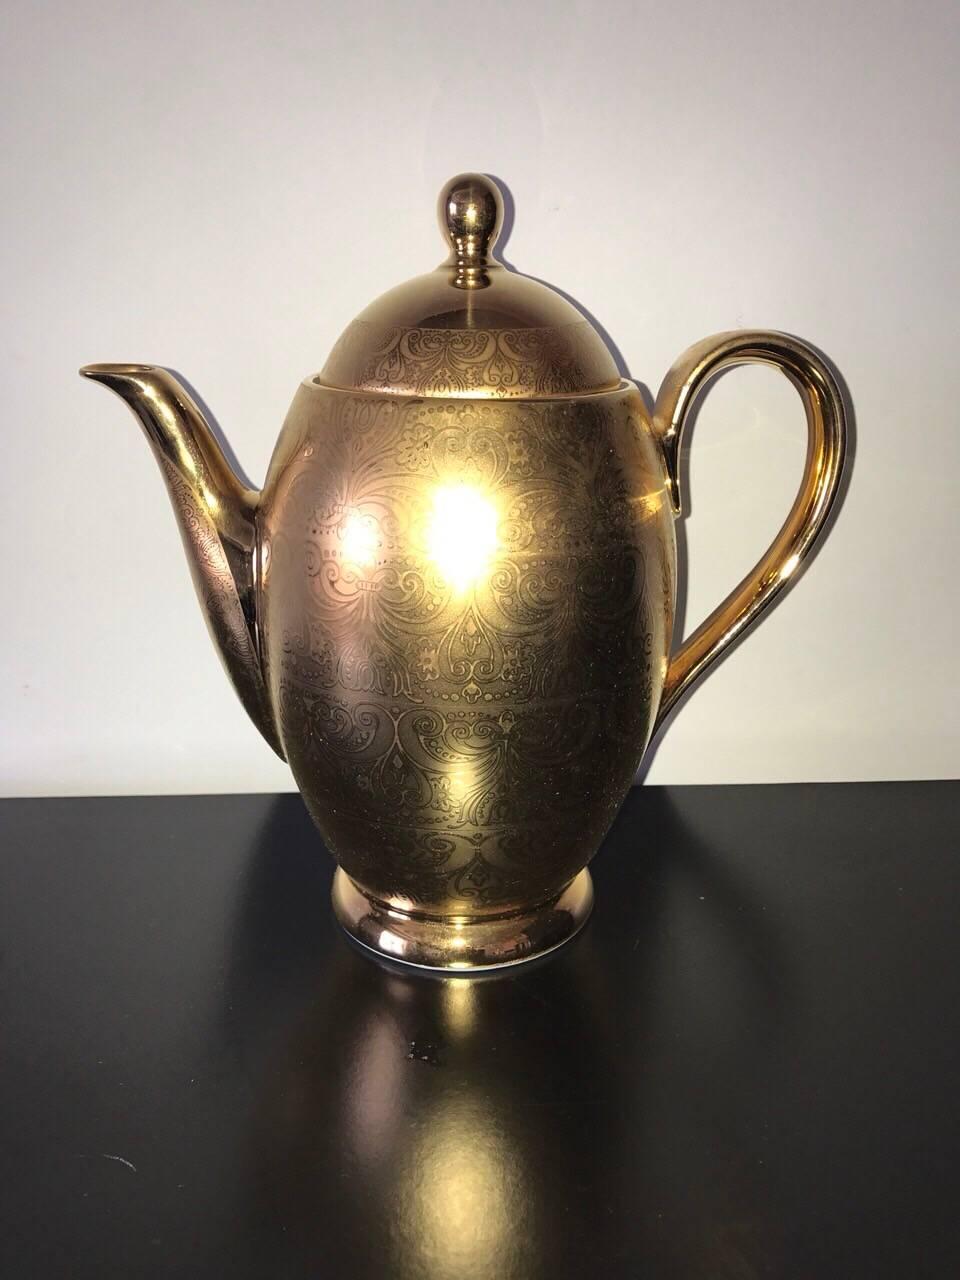 Amazing tea set gold leaf. 
QUALITY ROYALE LIMOGES-FRANCE 22 KAR GOLD
TEA SET
15 pieces:
1 tea pot with lid aprox. 9 1/4” h
1 sugar bowl with lid aprox 4” H
1 creamer 3 1/2” h
6 cups 3 1/4 h
6 saucers, 5 1/2 diameter

 